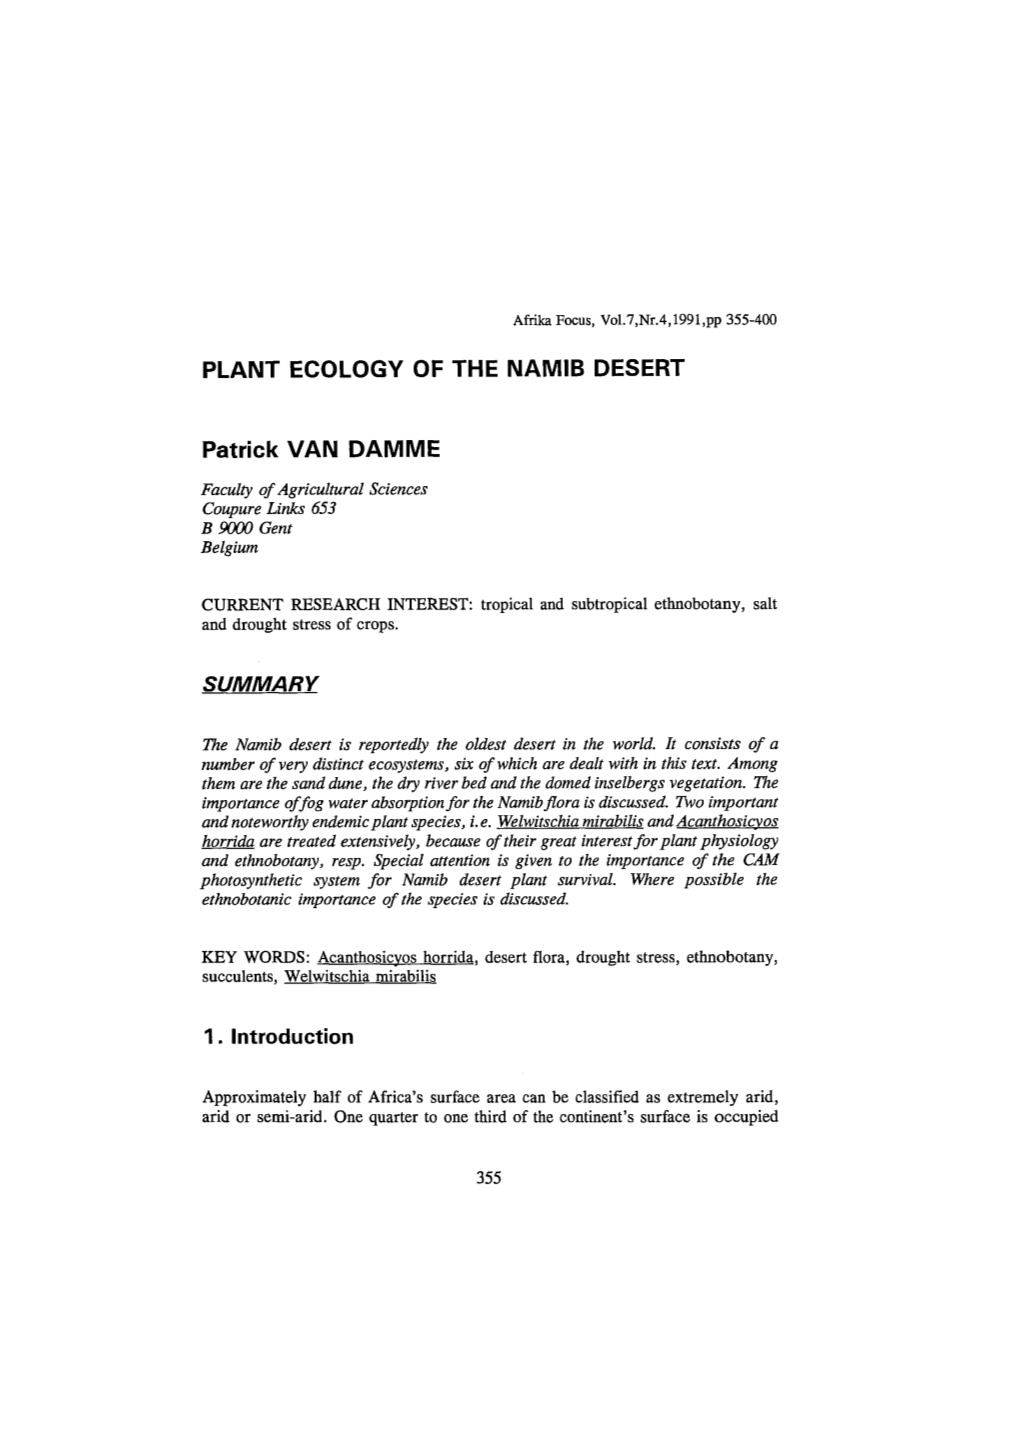 PLANT ECOLOGY of the NAMIB DESERT Patrick VAN DAMME 1. Introduction